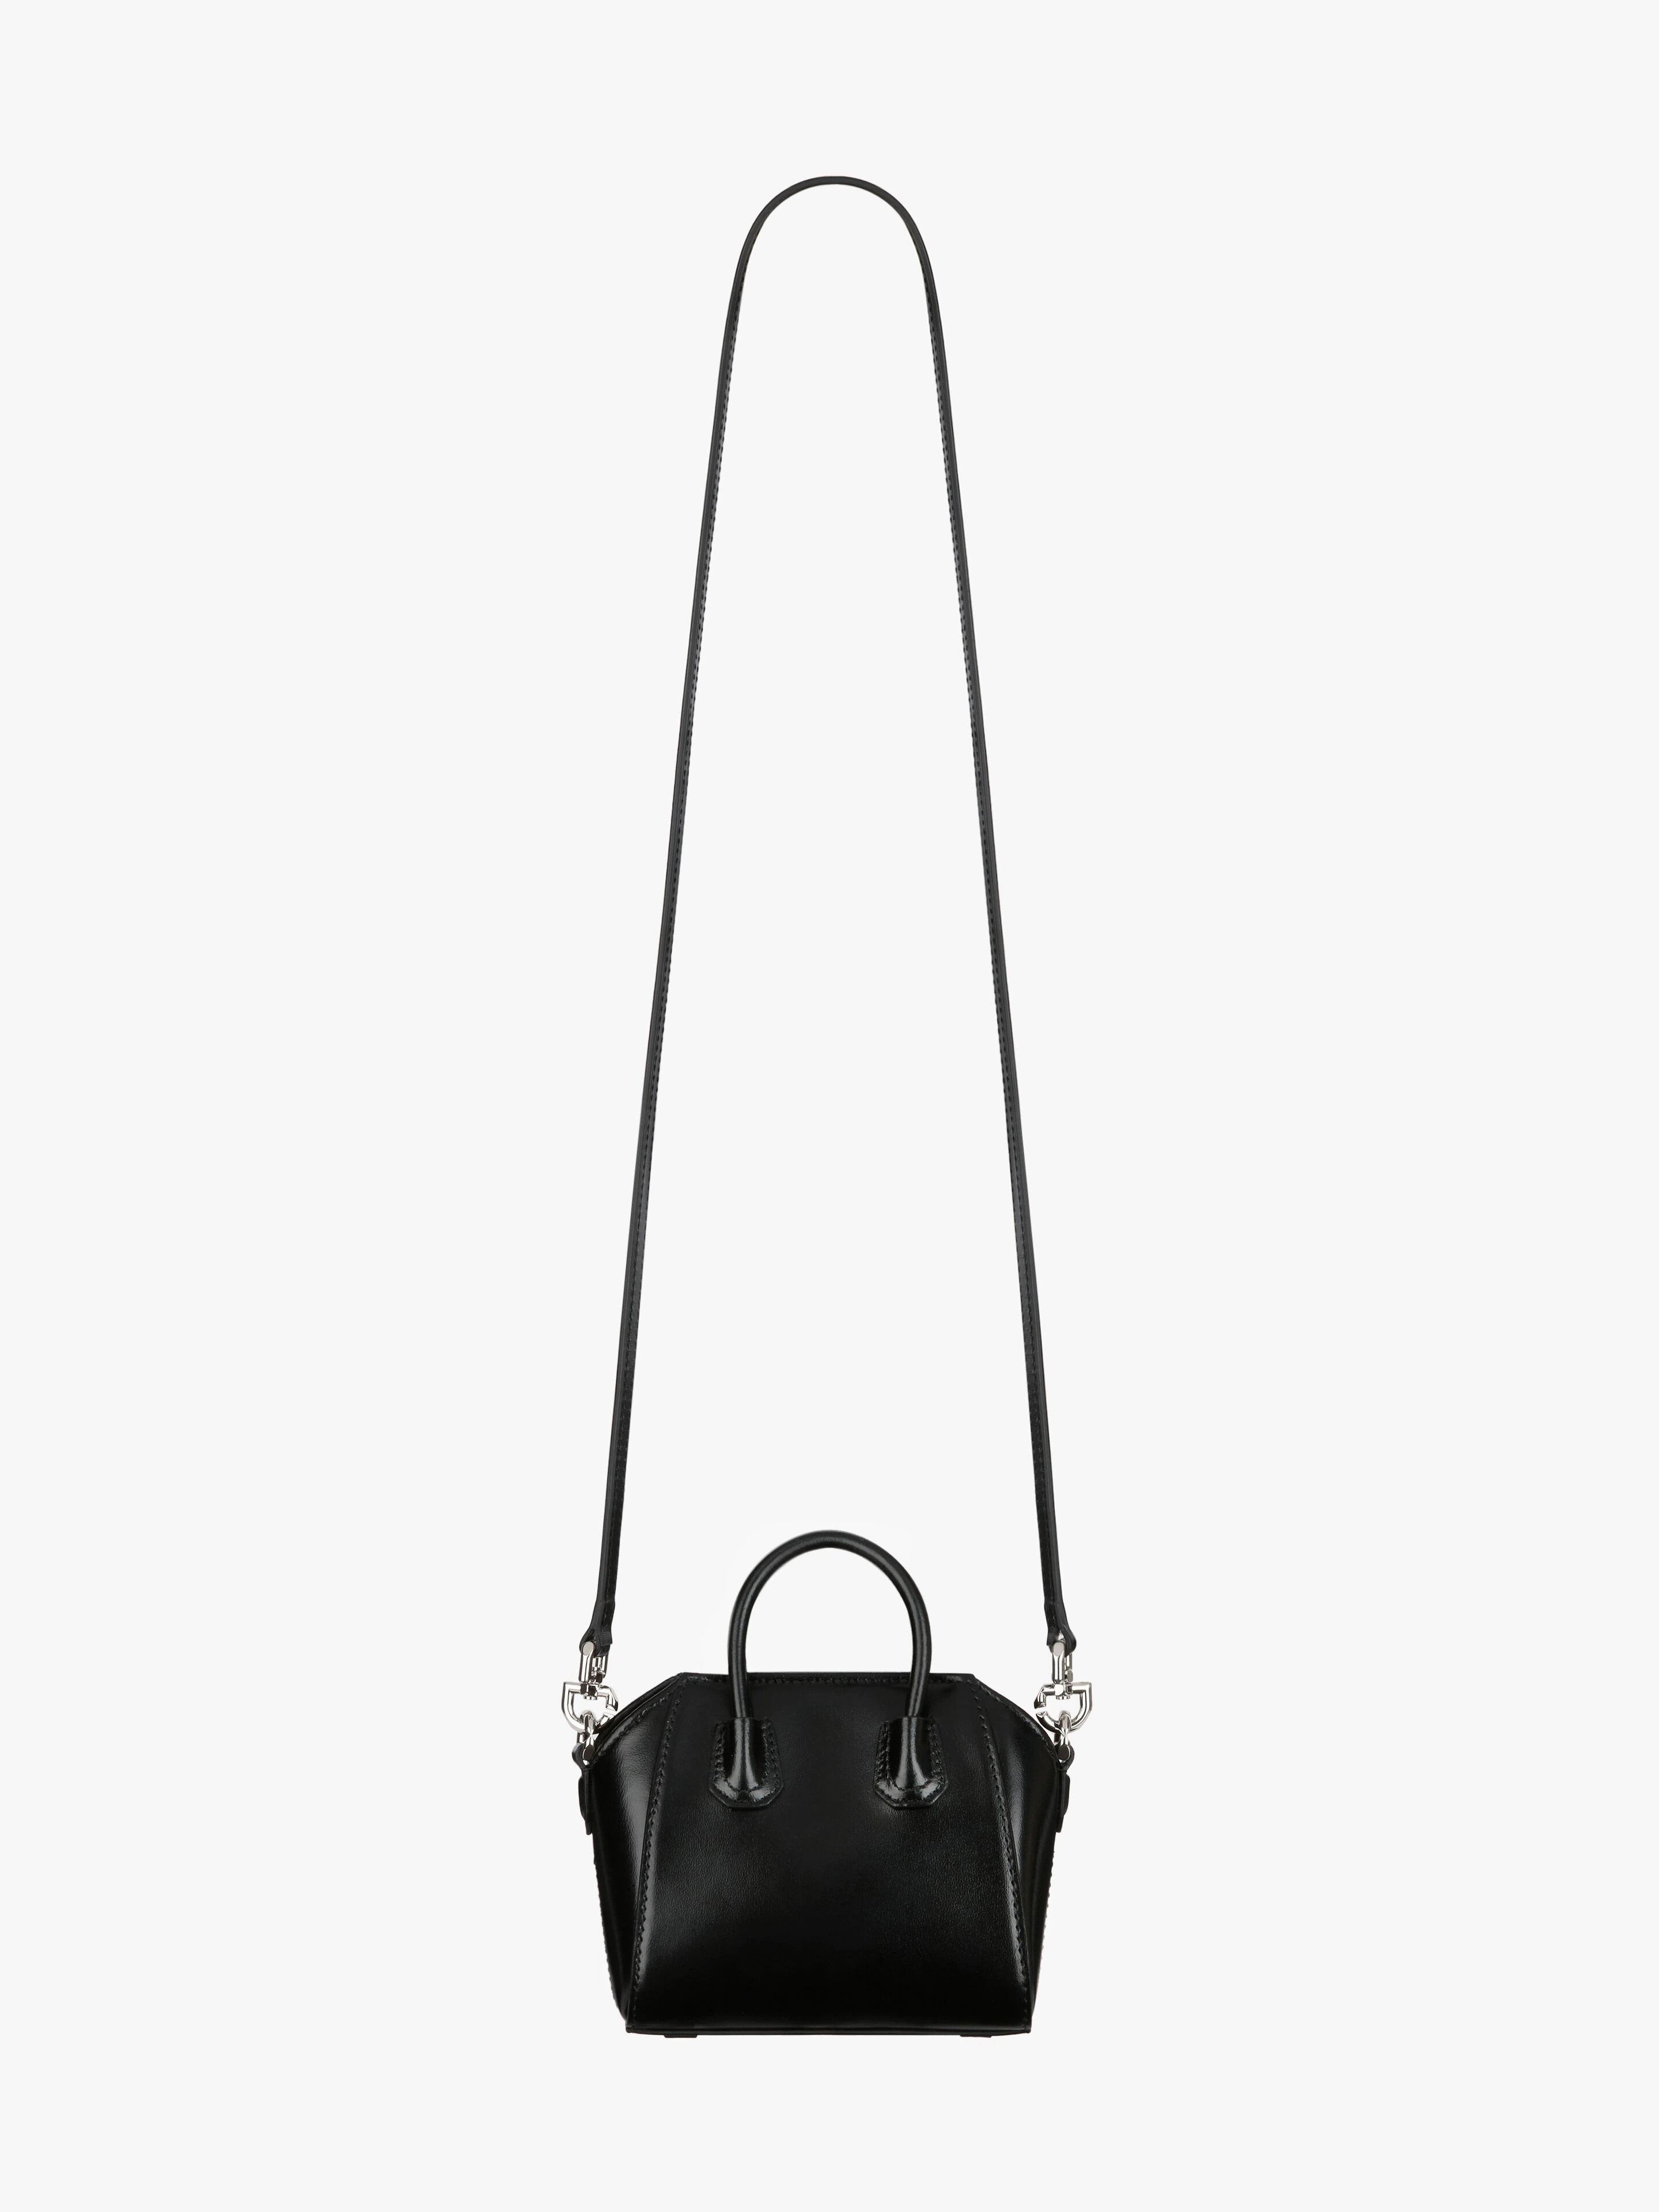 Givenchy MICRO ANTIGONA BAG IN BOX LEATHER